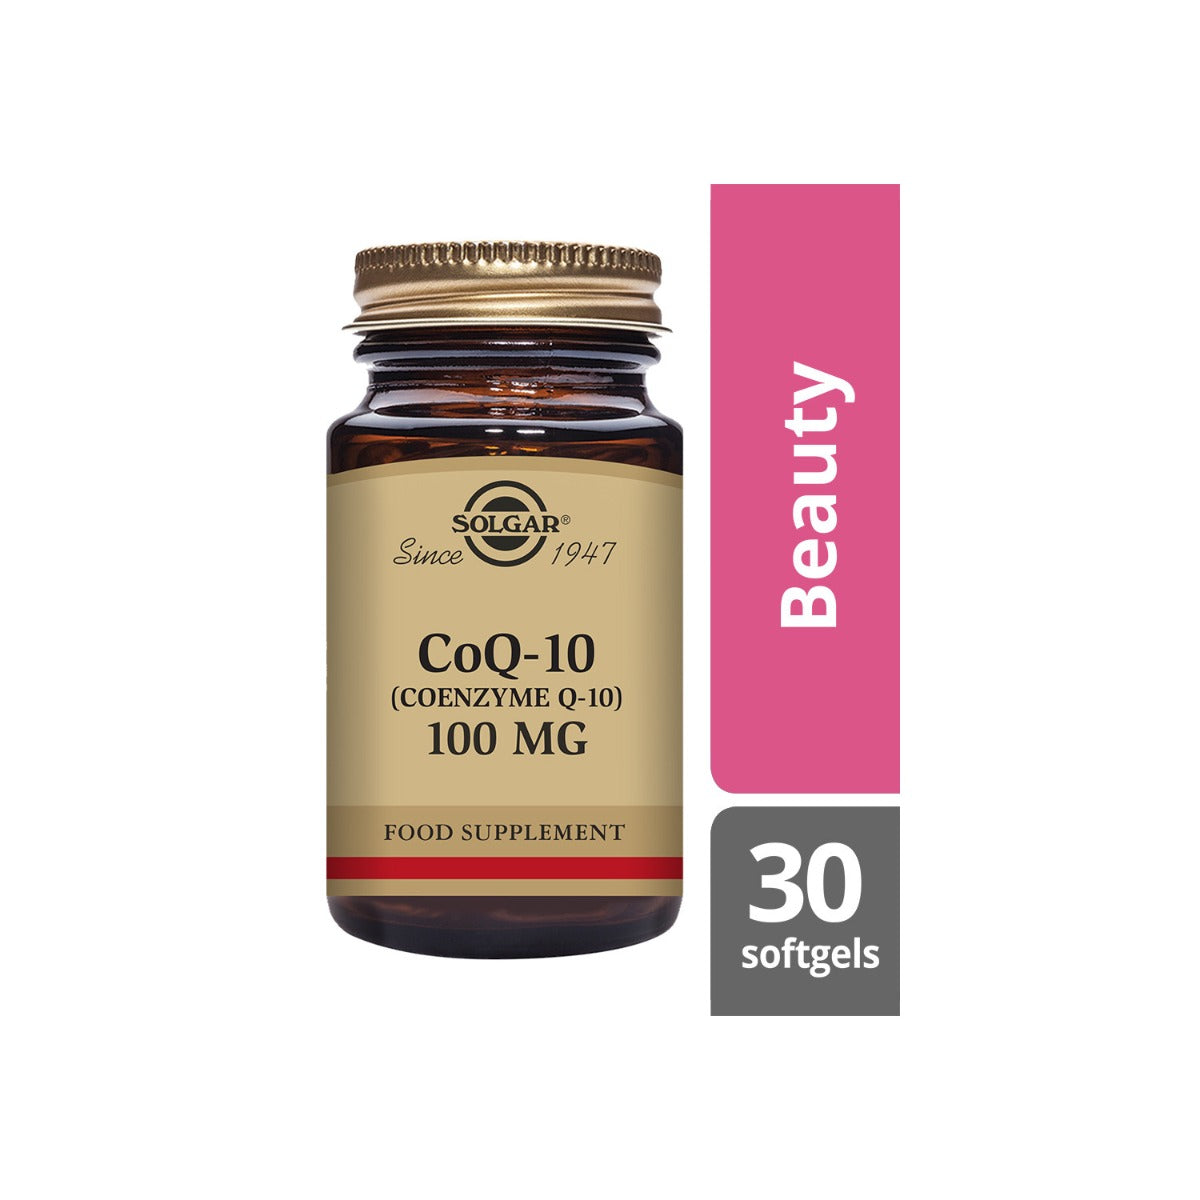 Solgar® CoQ-10 (Coenzyme Q-10) 100 mg Softgels - Pack of 30